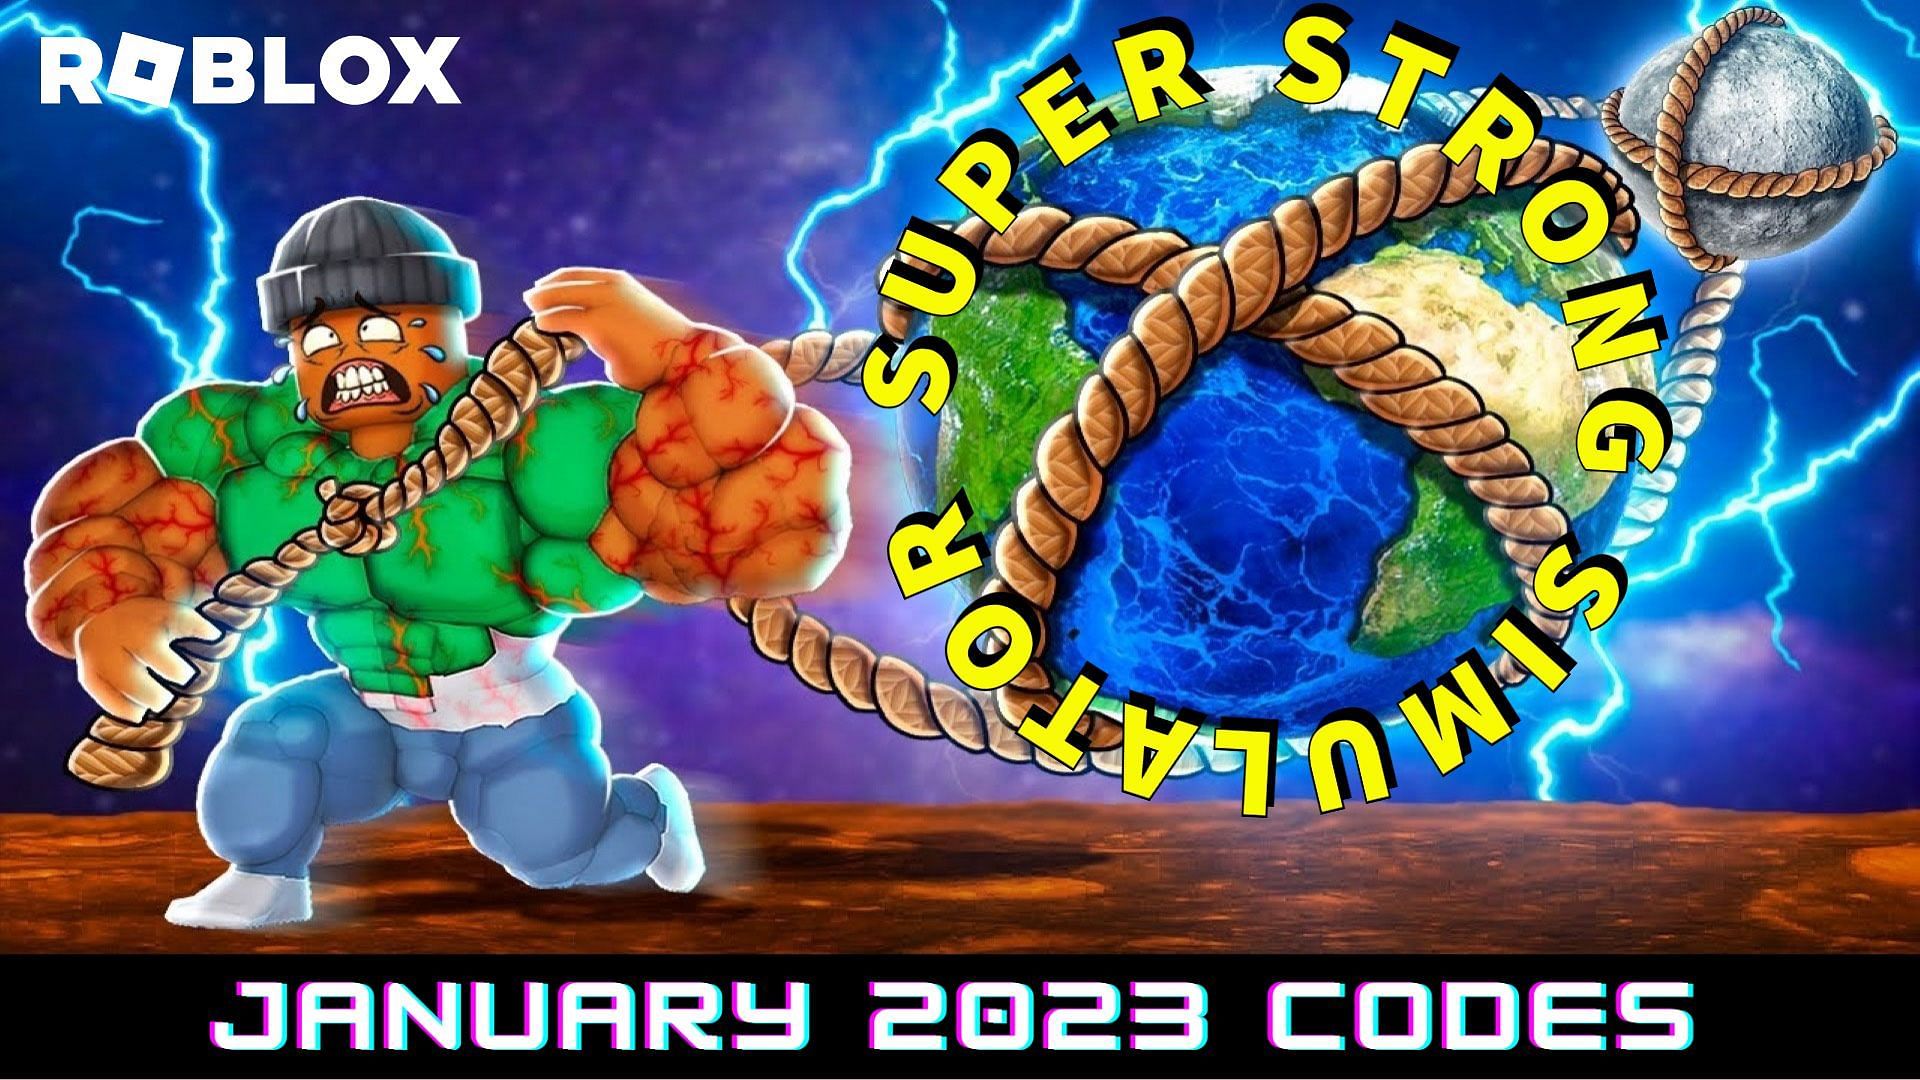 New] Roblox Speed Run Simulator codes Mar 2023 - Super Easy